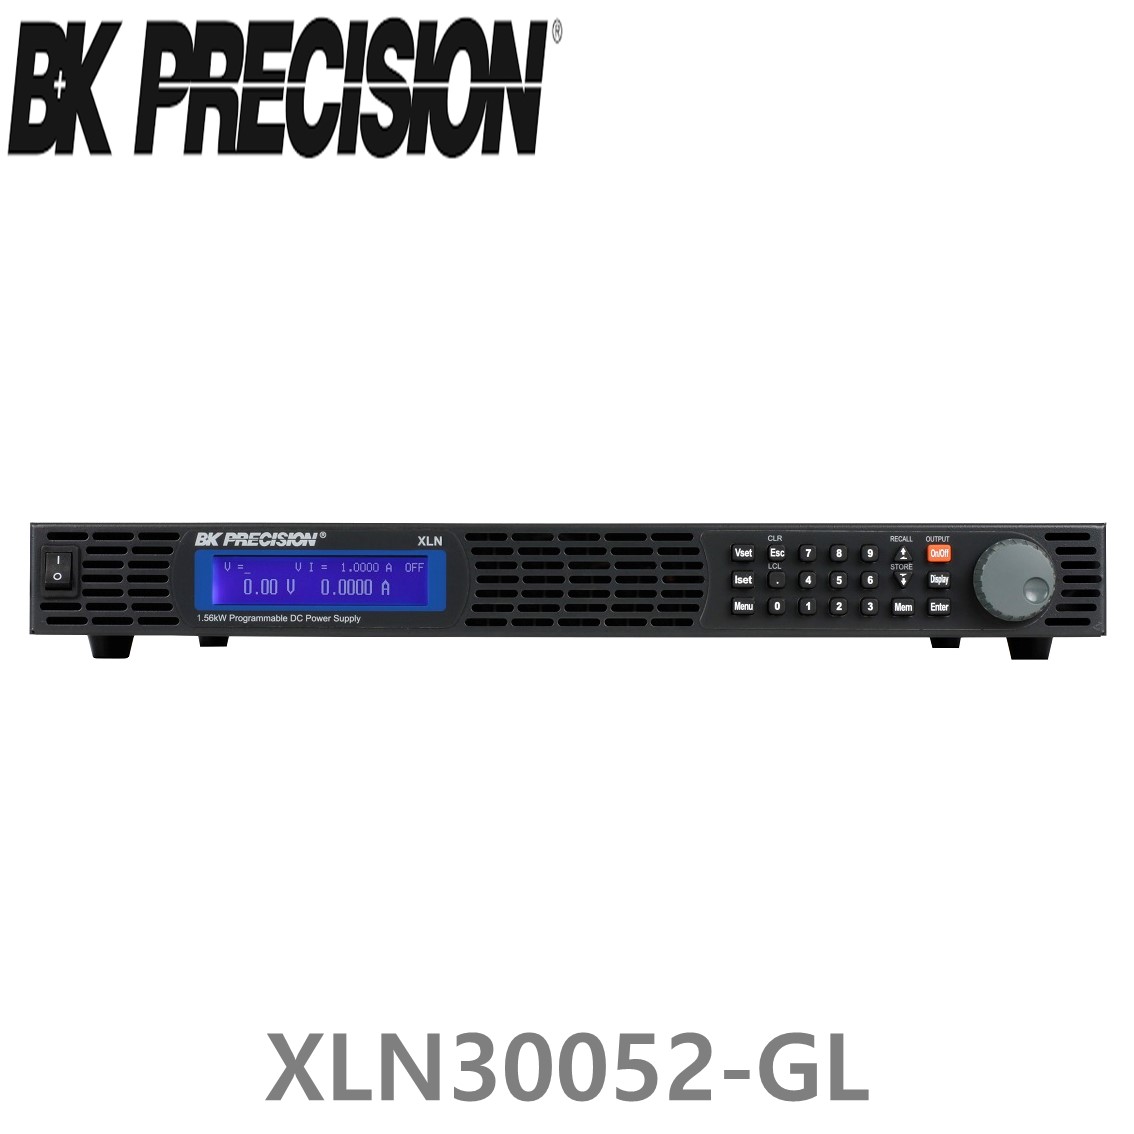 [ B&K PRECISION ] XLN30052-GL, 300V/5.2A(1560W), GPIB Interface, Programmable DC Power Supply, 프로그래머블 DC 전원공급기, B&K XLN30052-GL